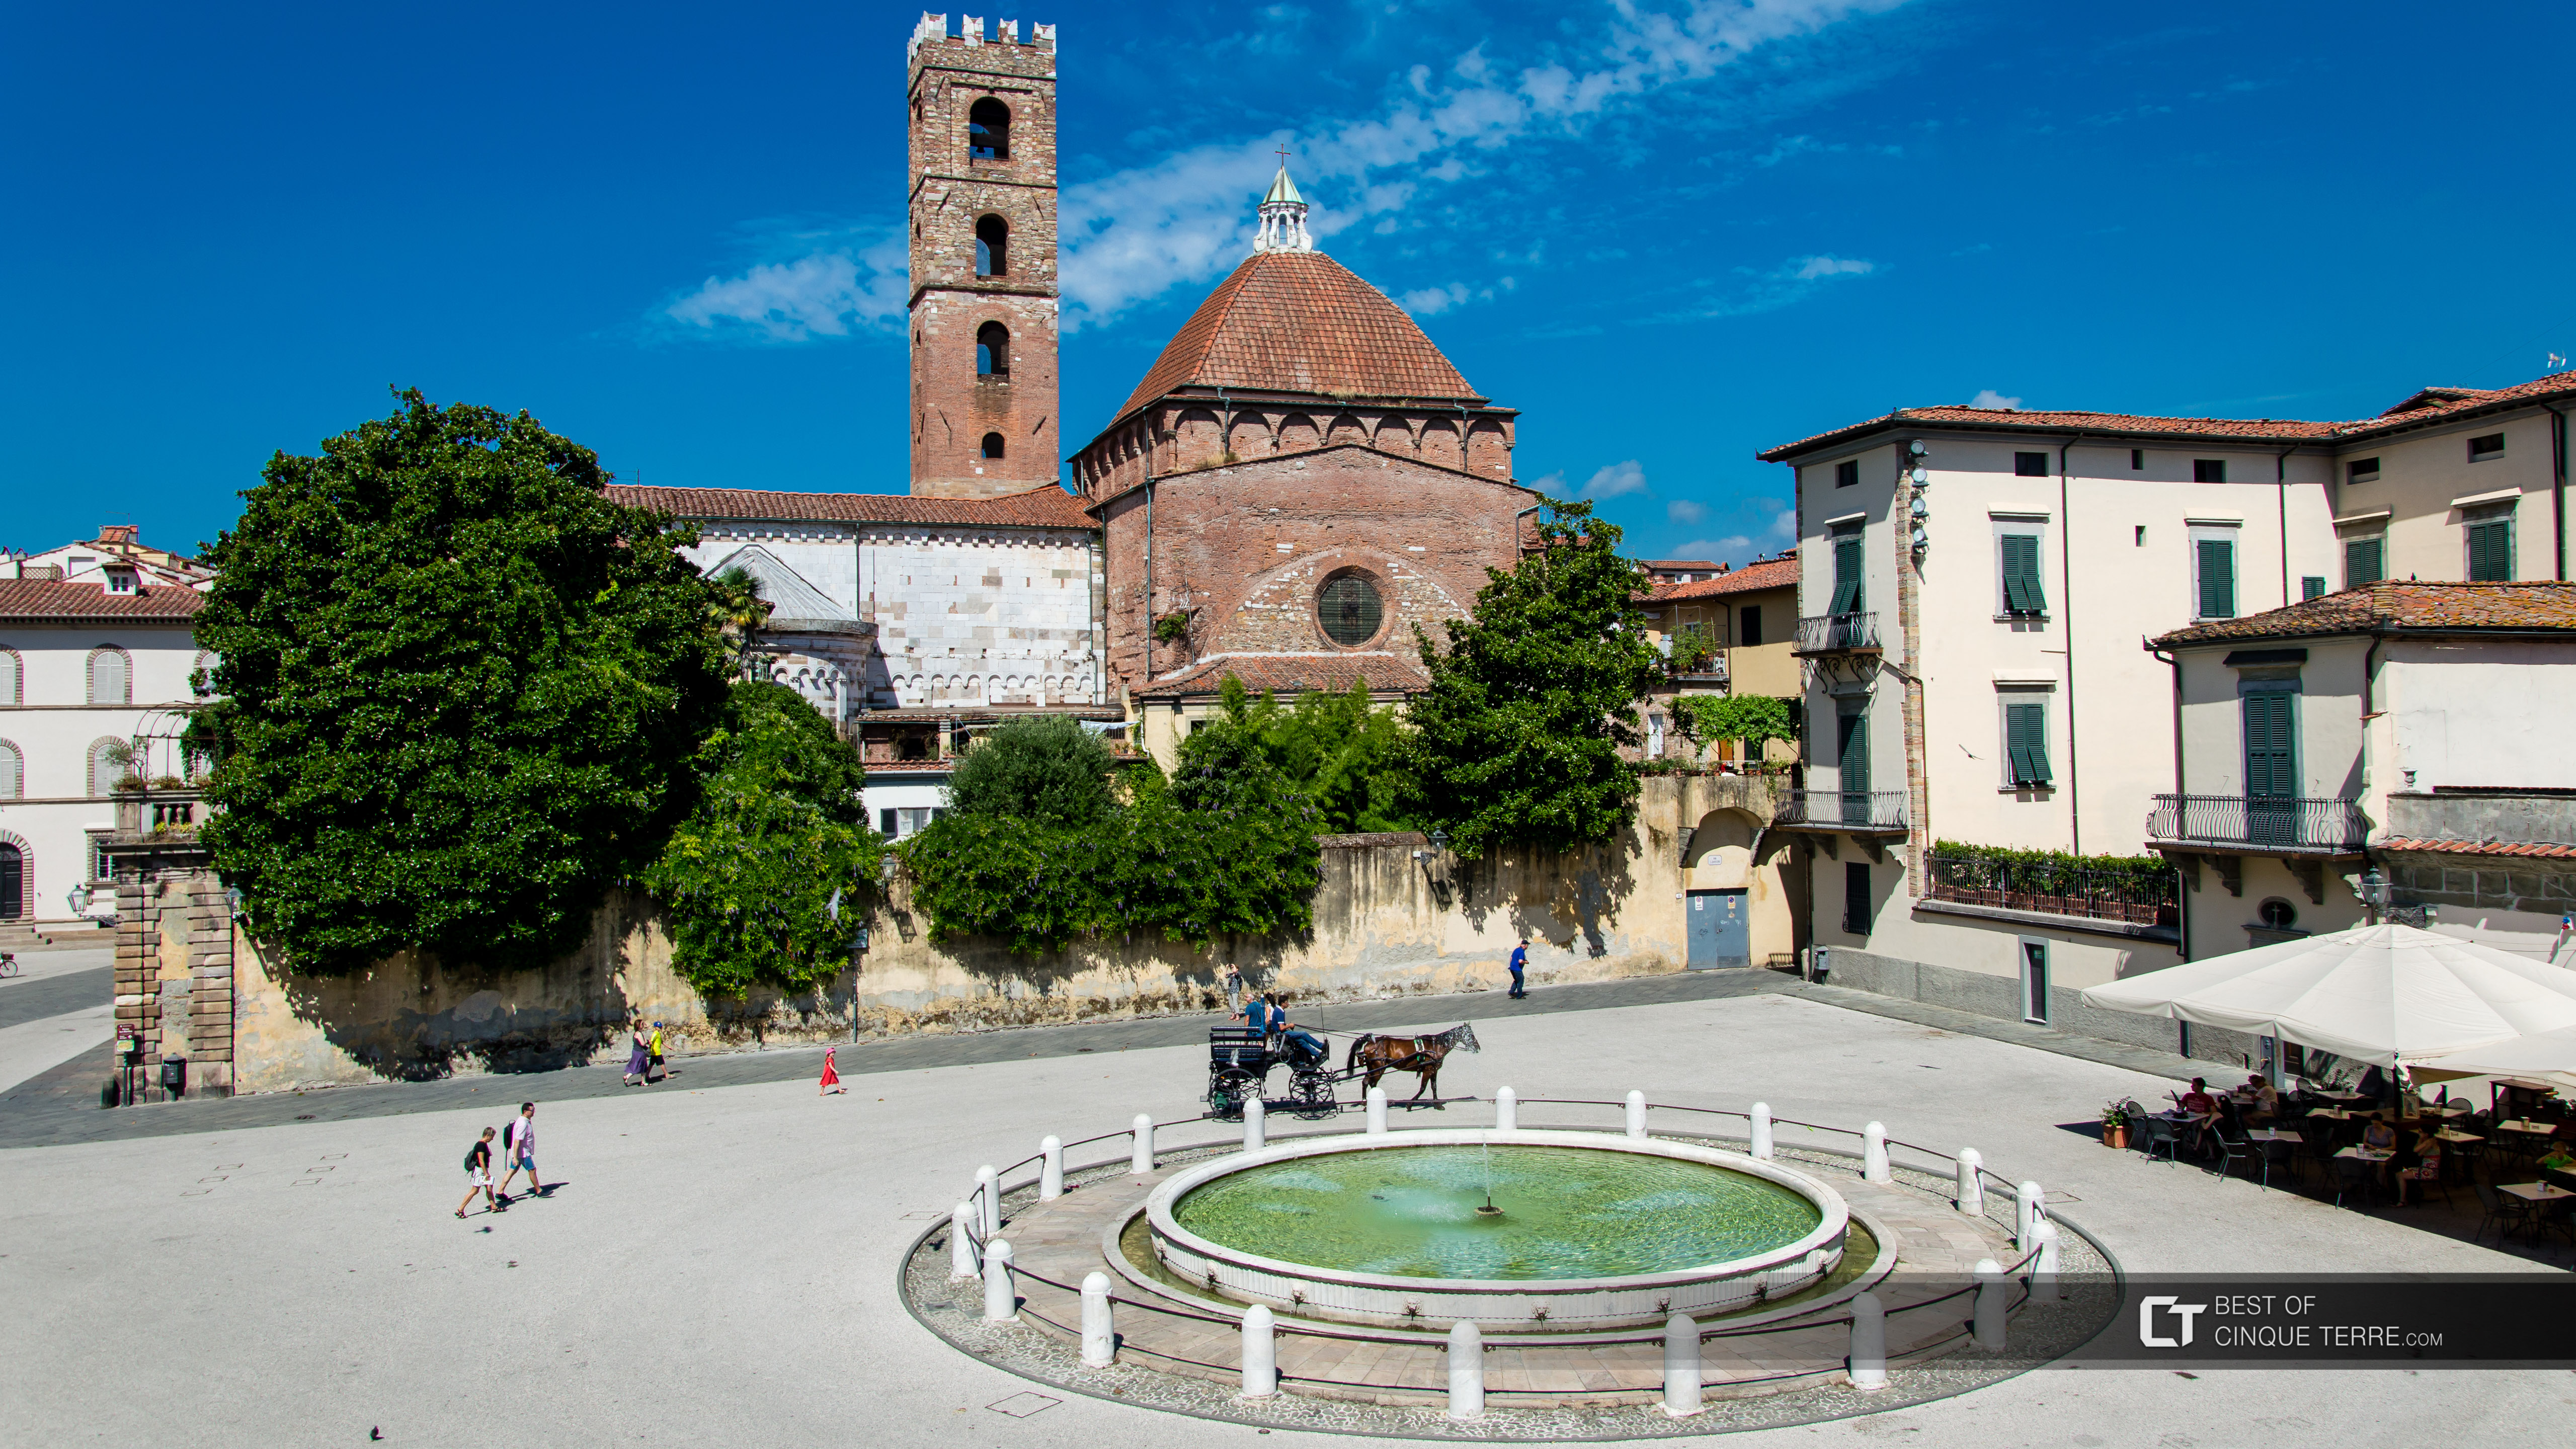 Piața Antelminelli și Clopotnița bisericii Santi Giovanni, Lucca, Italia